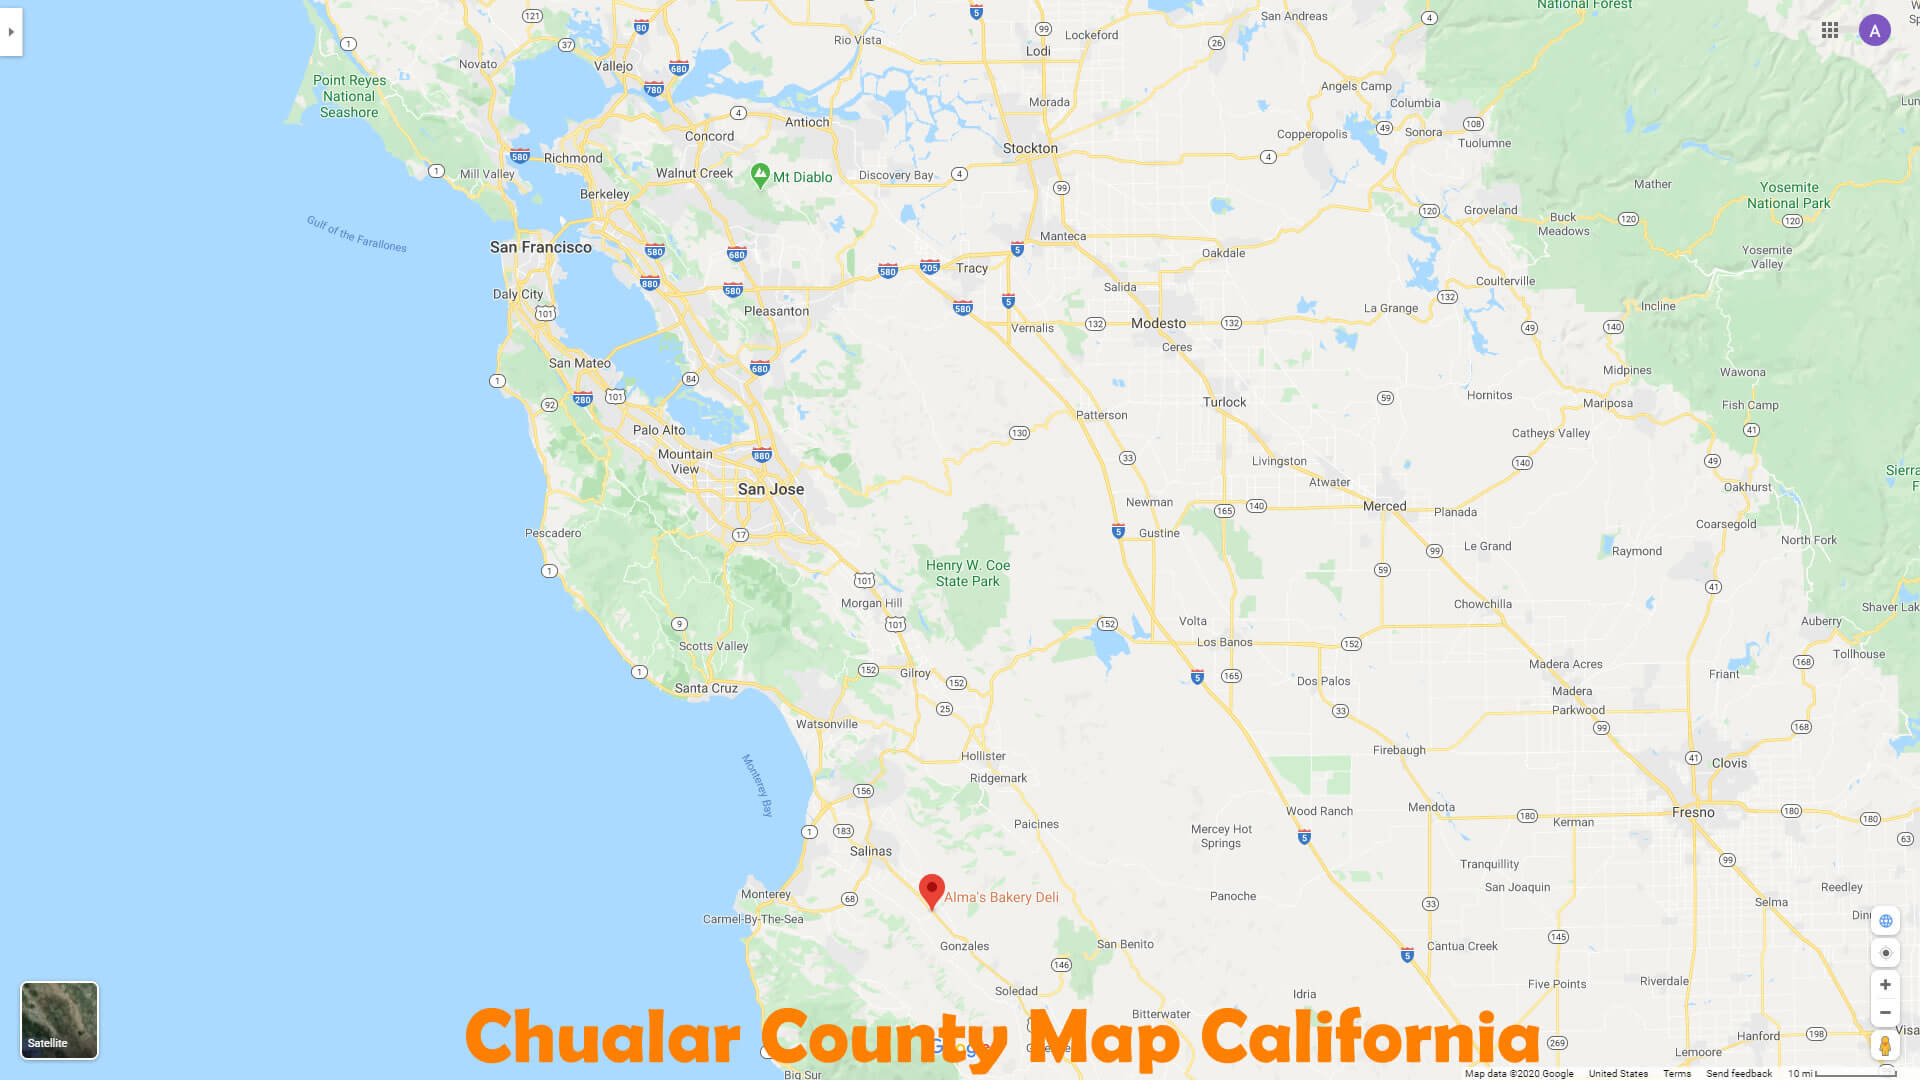 Chualar County Map California